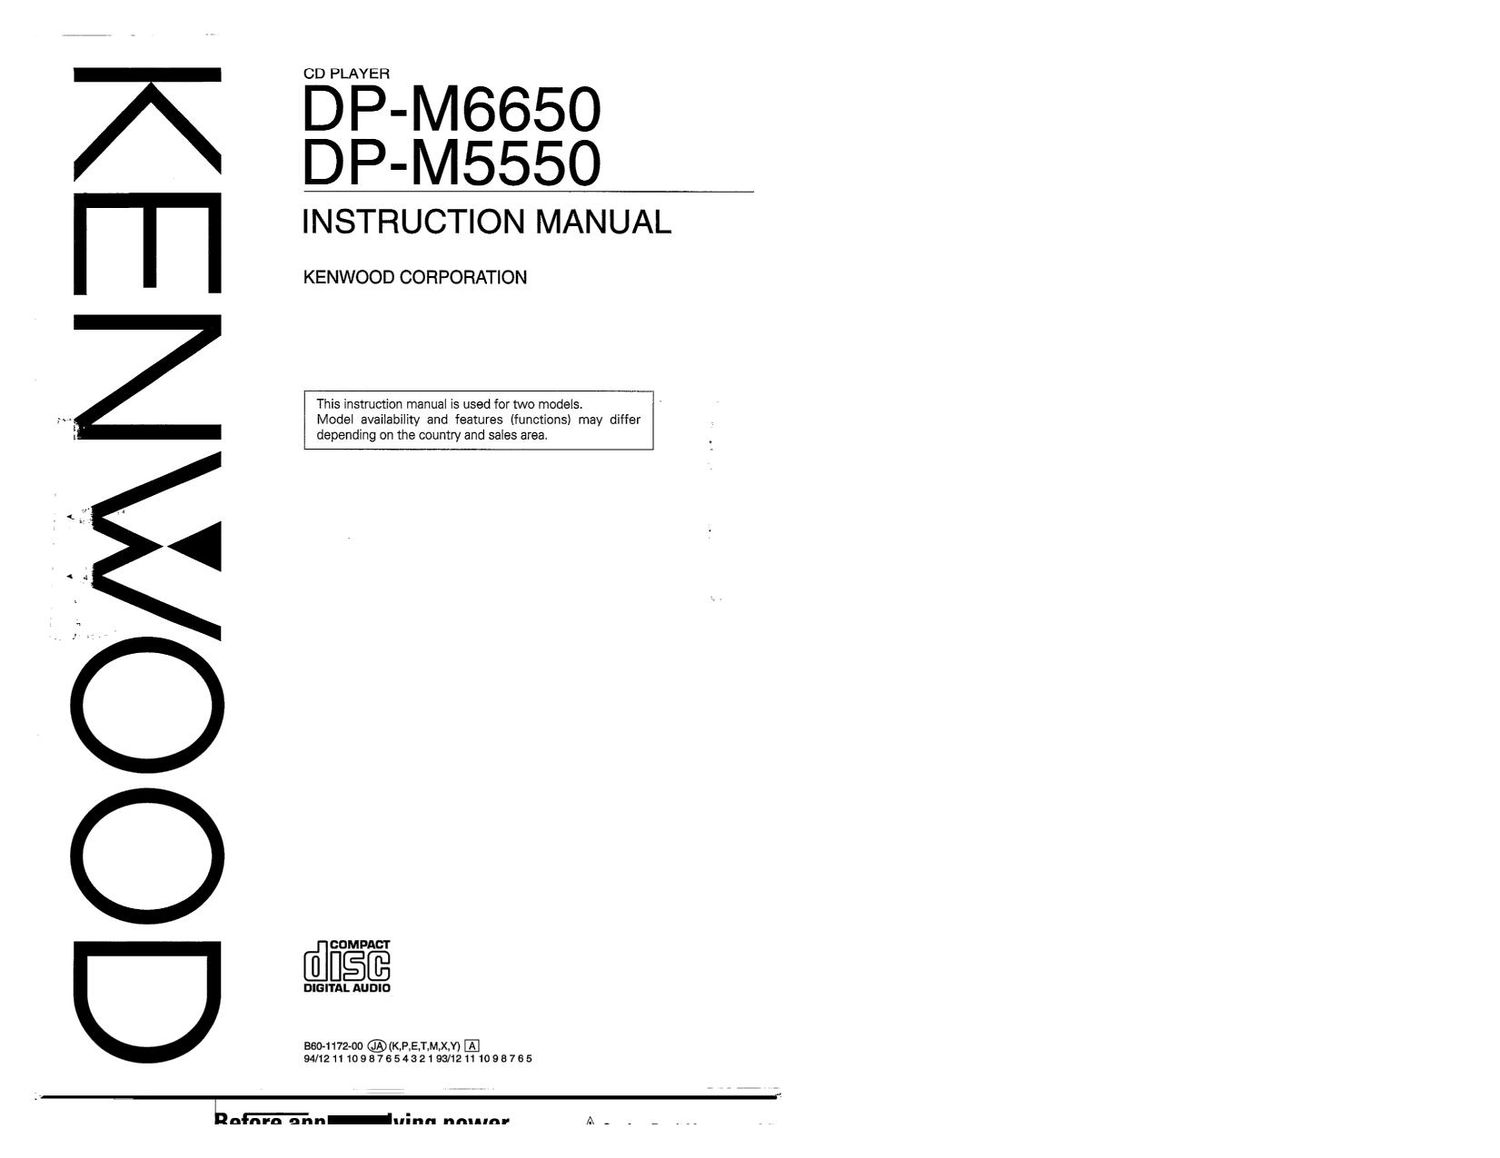 Kenwood DPM 5550 Owners Manual